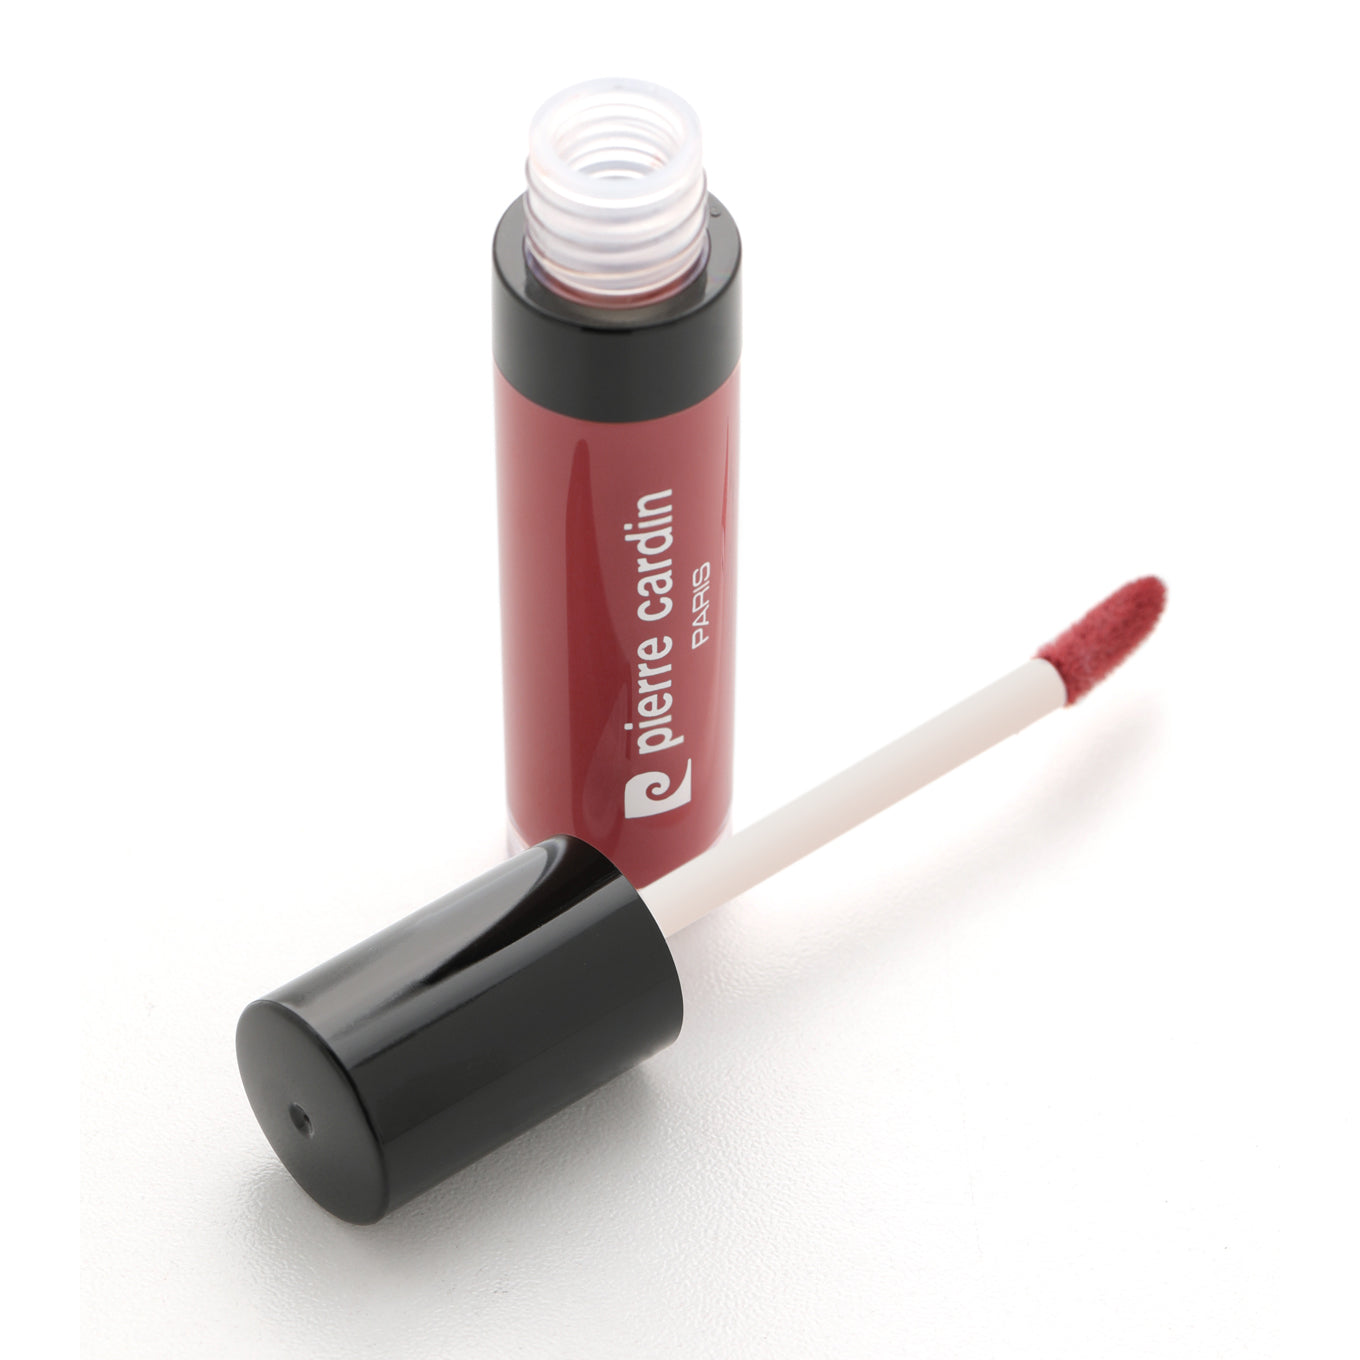 Pierre Cardin Staylong Lipcolor-Kissproof Very Cherry 349 - 5 ml